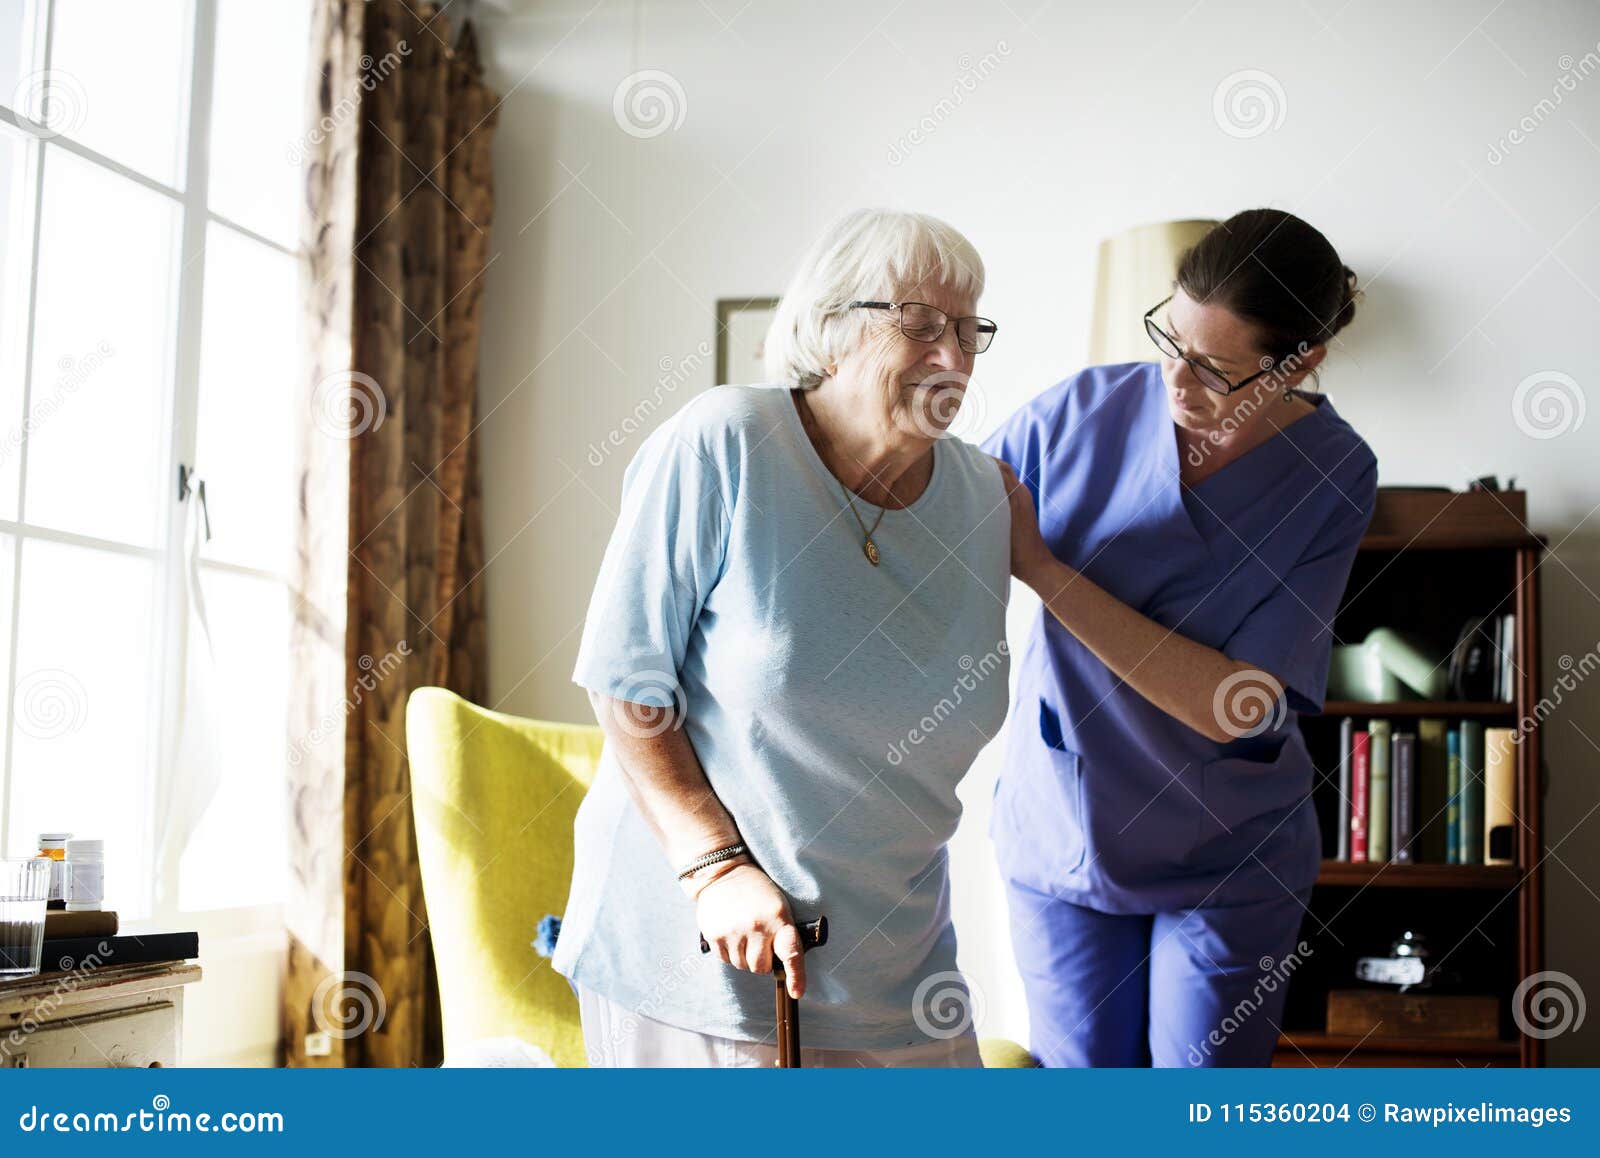 nurse helping senior woman to stand